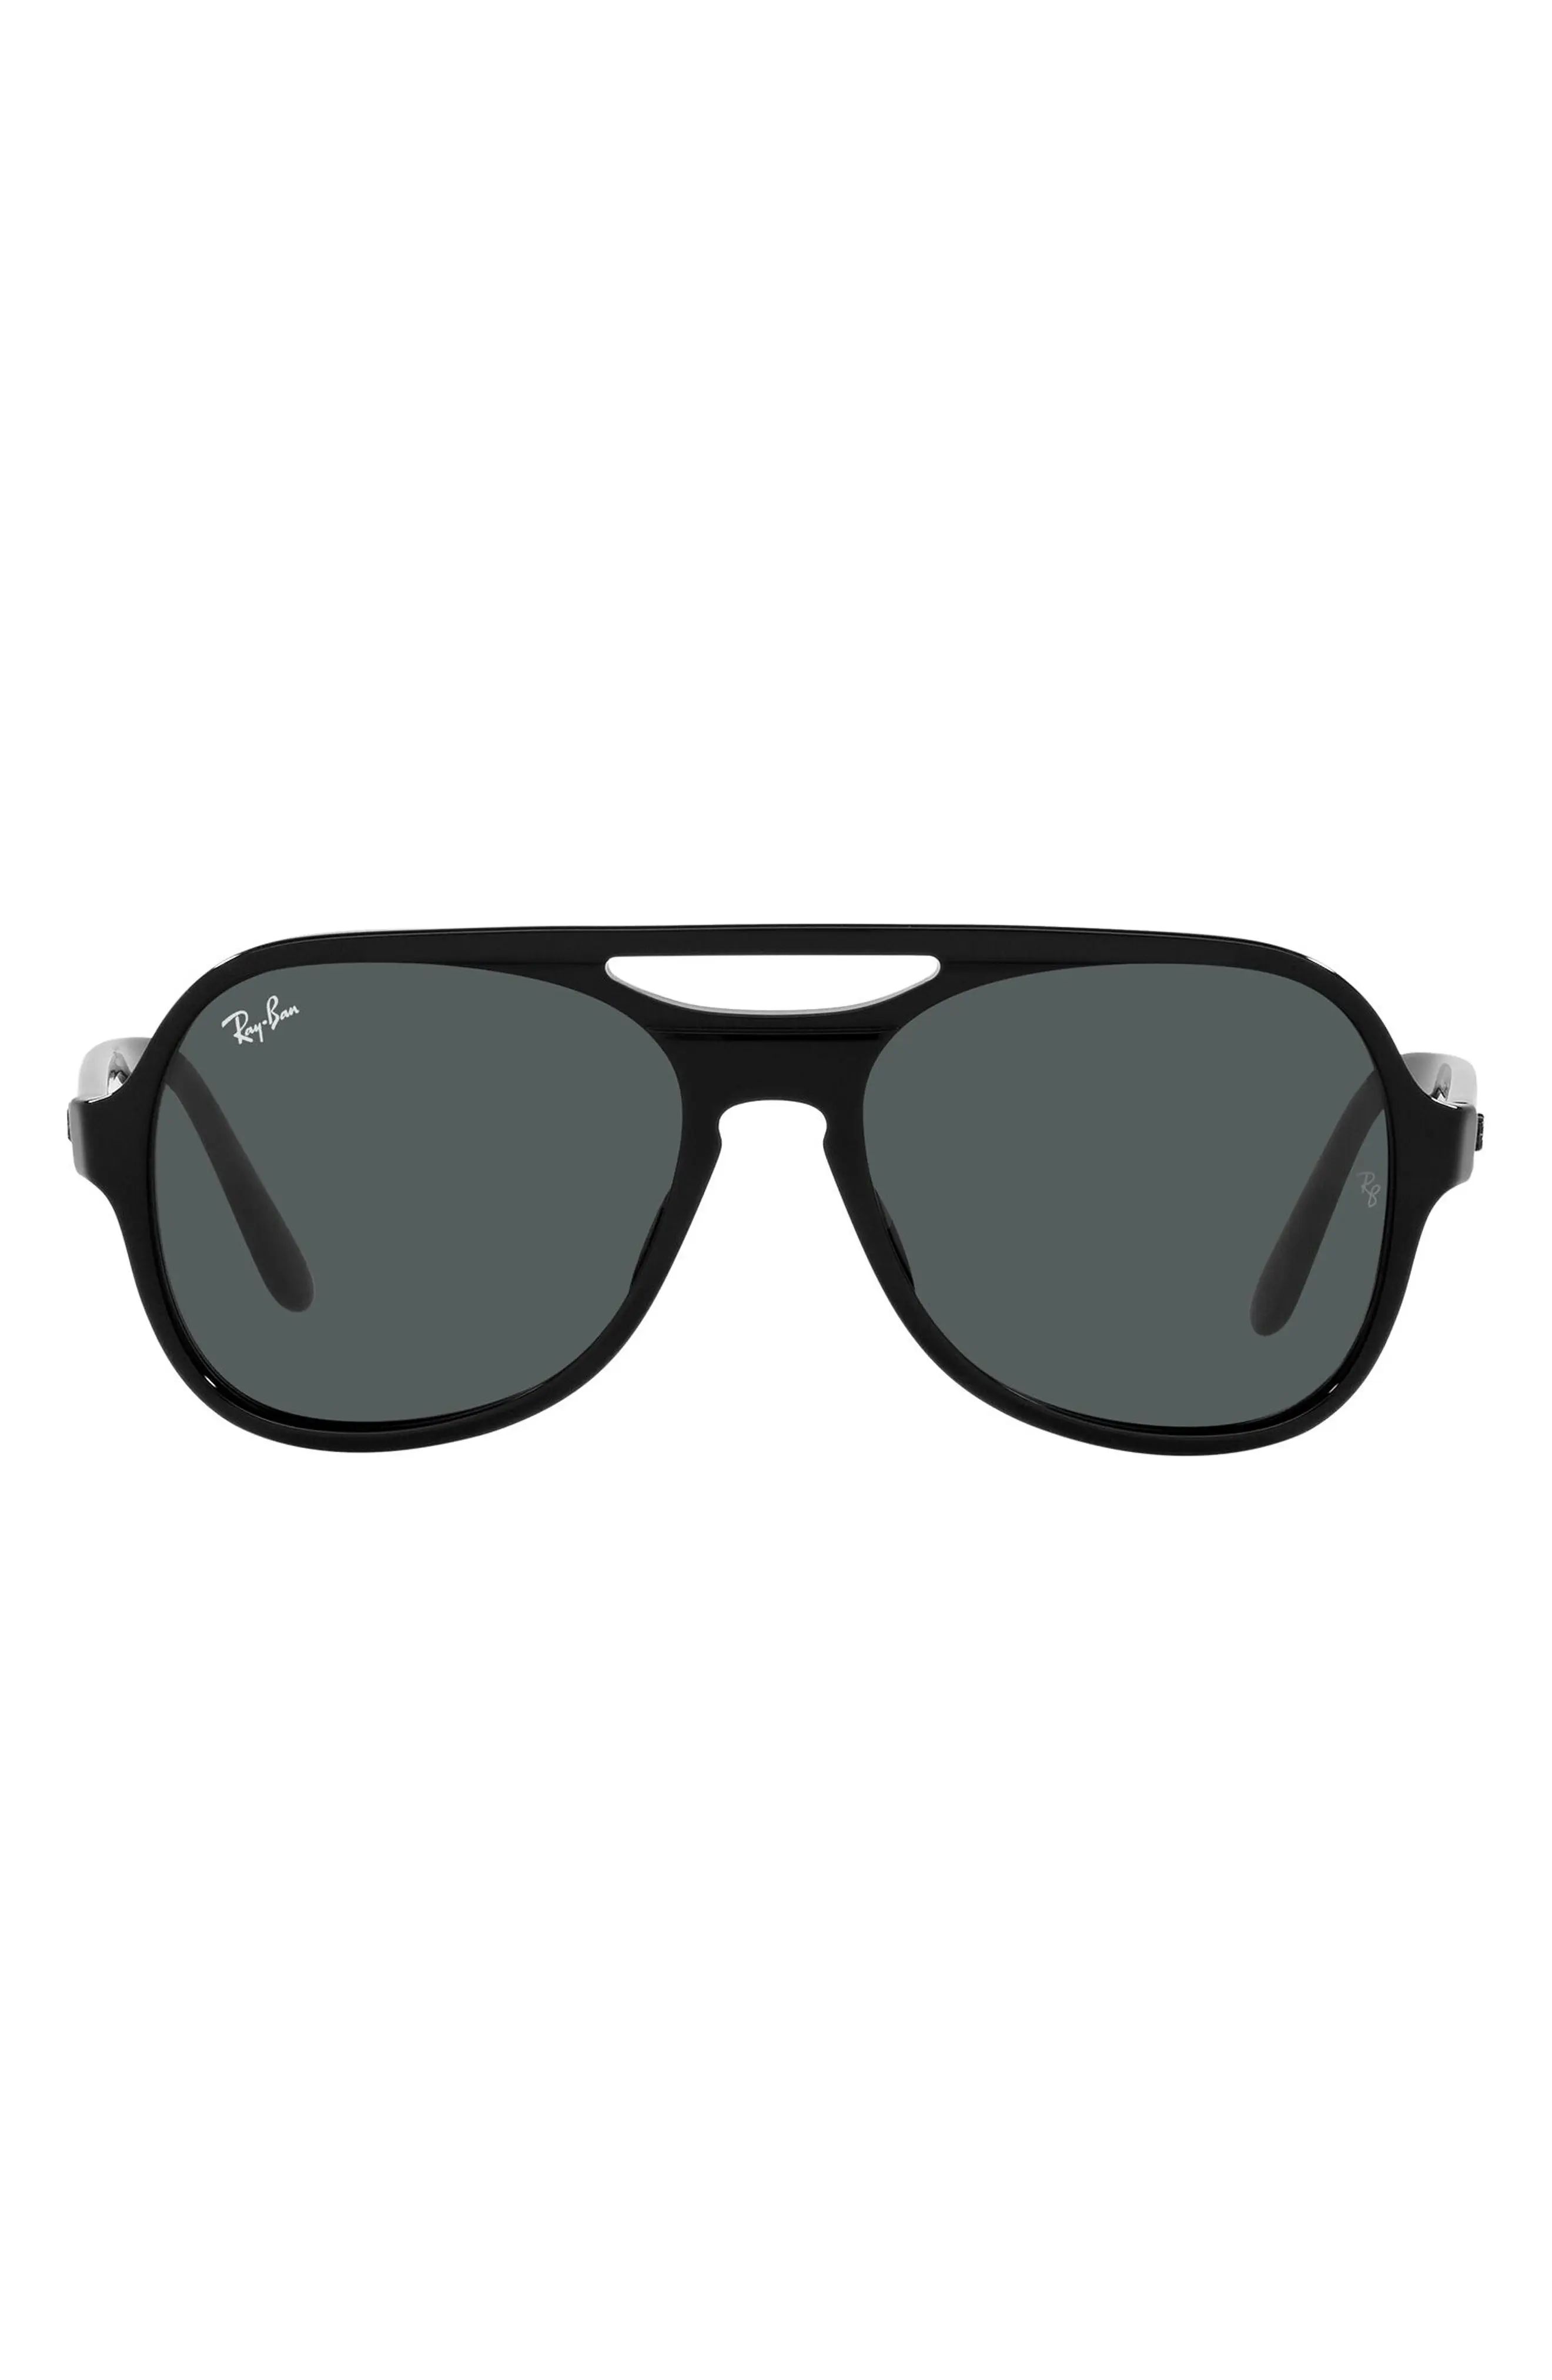 Ray-Ban 58mm Aviator Sunglasses in Black at Nordstrom | Nordstrom